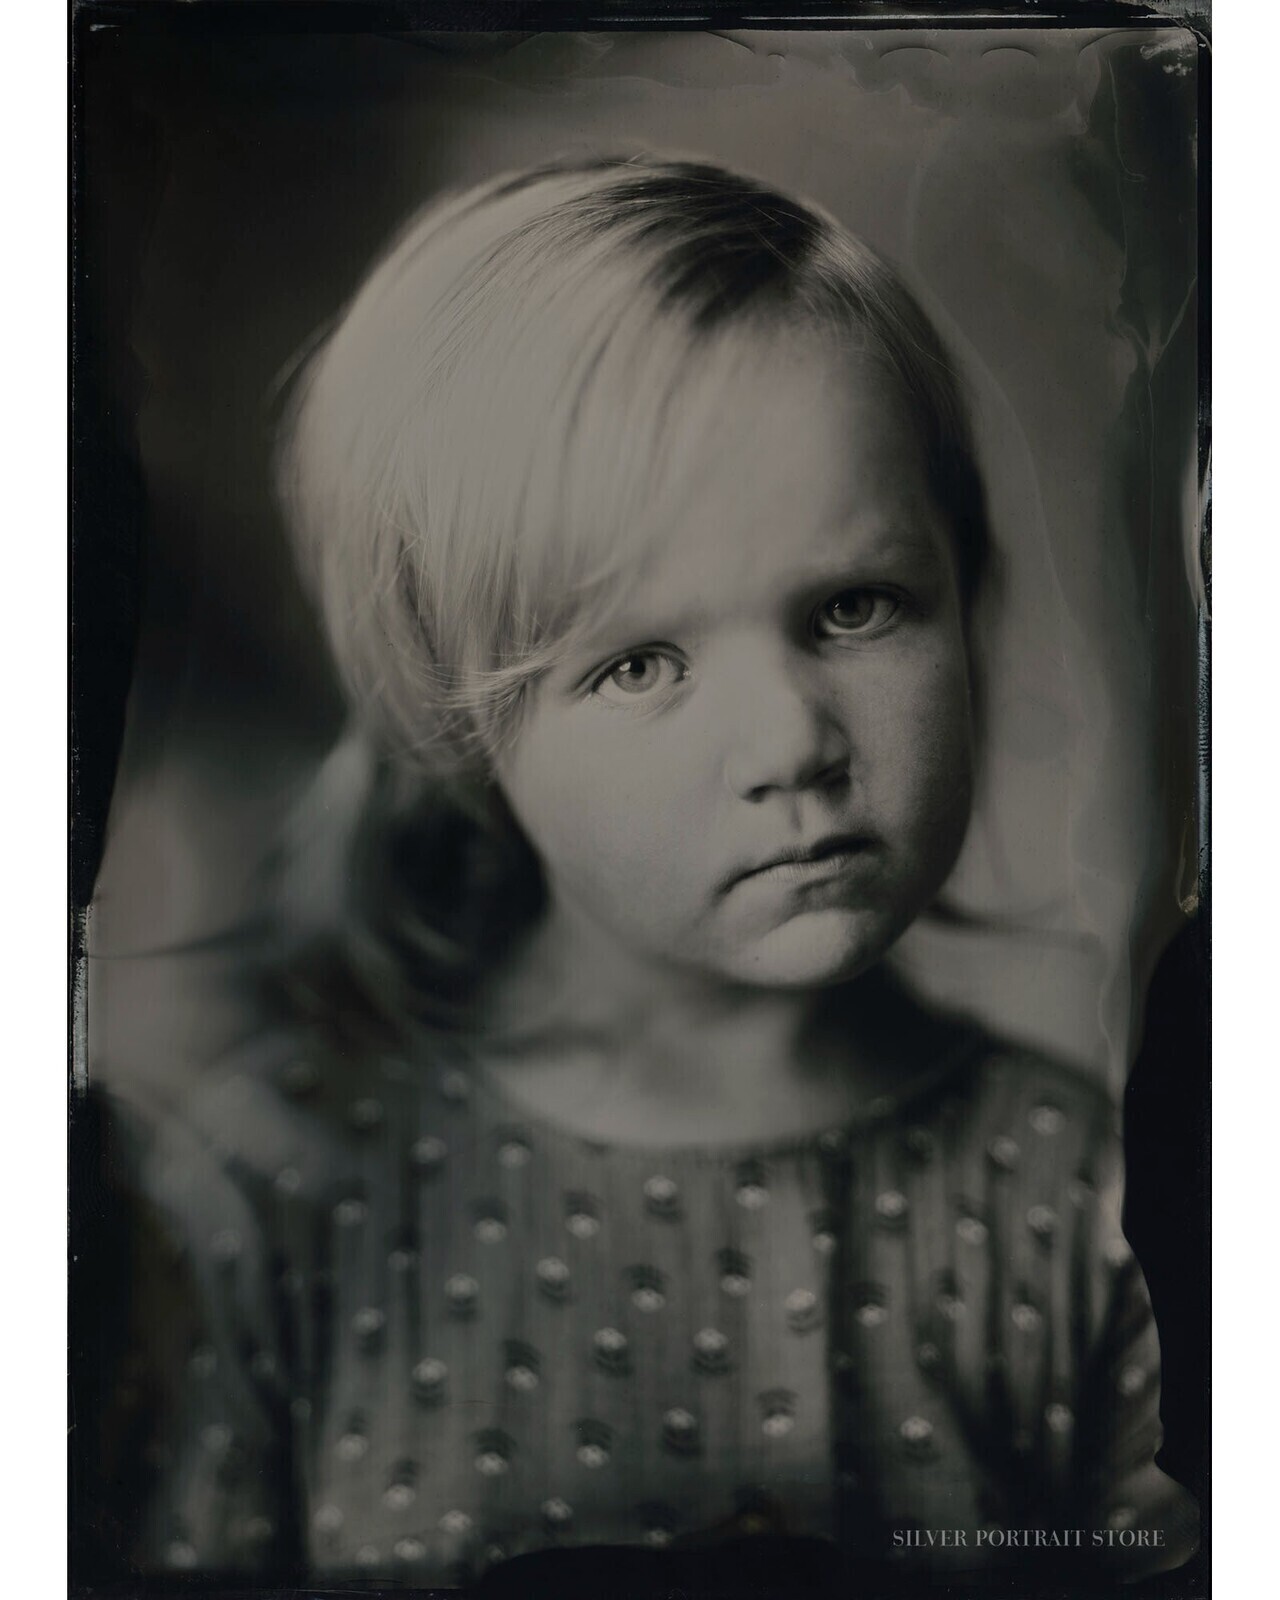 Julie-Silver Portrait Store-Wet plate collodion Tintype 13 x 18 cm.